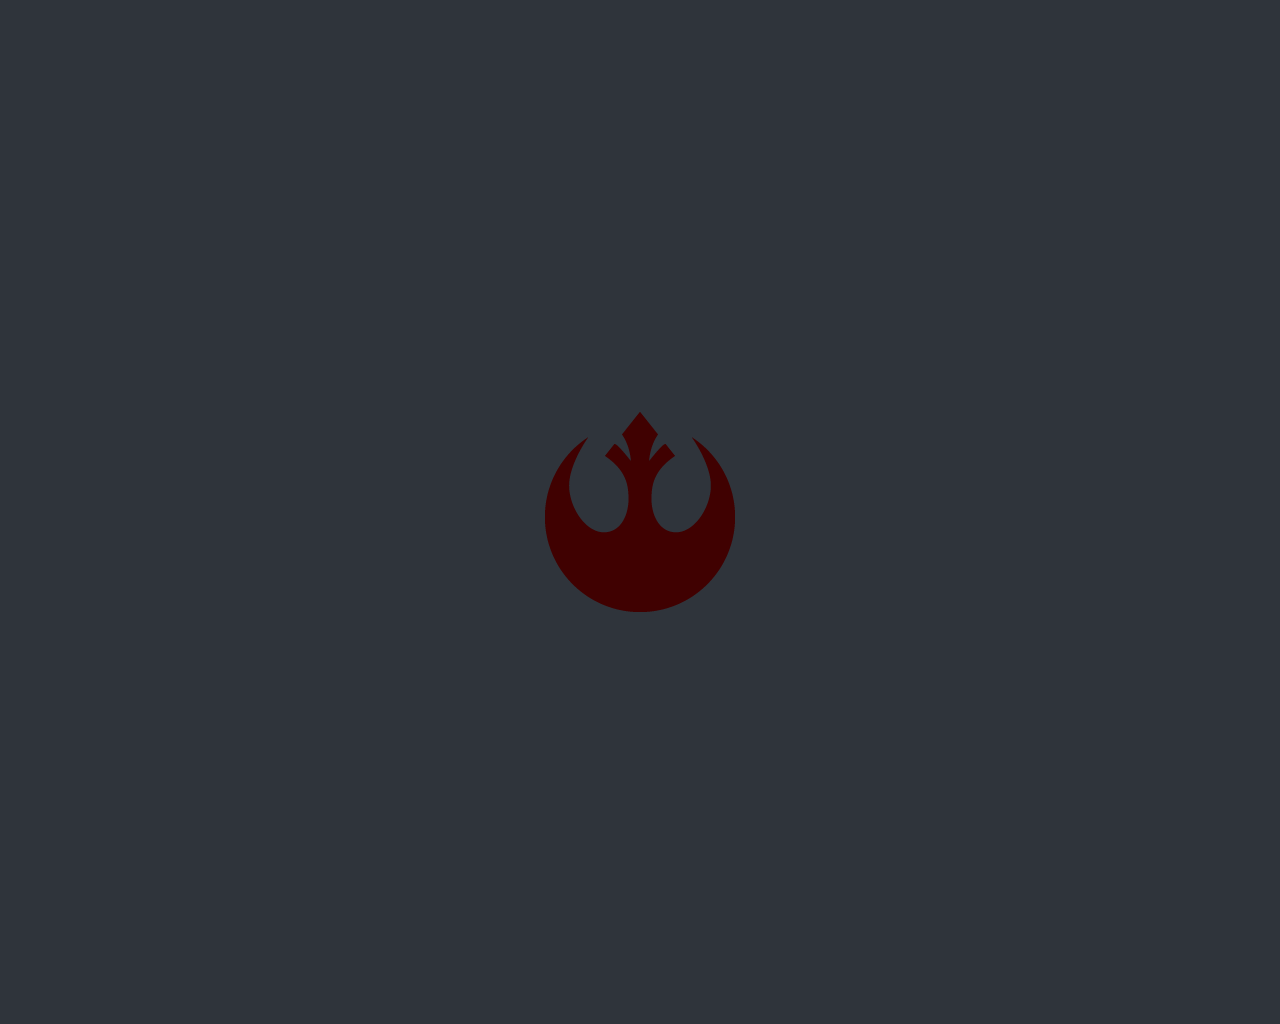 Star Wars Rebel Alliance wallpaper